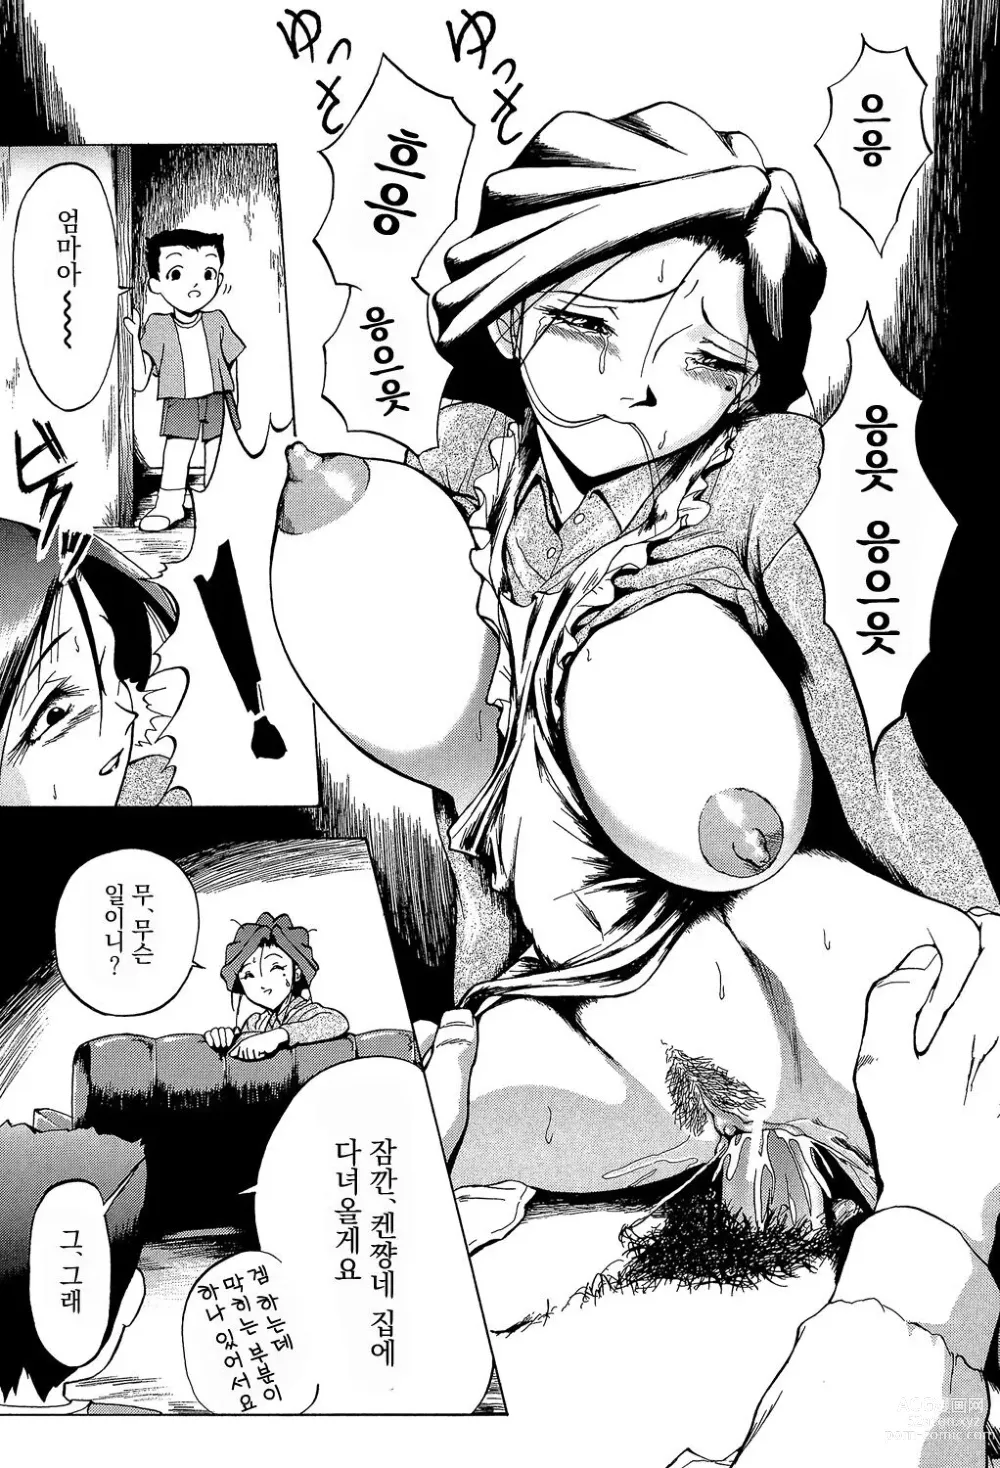 Page 9 of manga Inyou Reibo